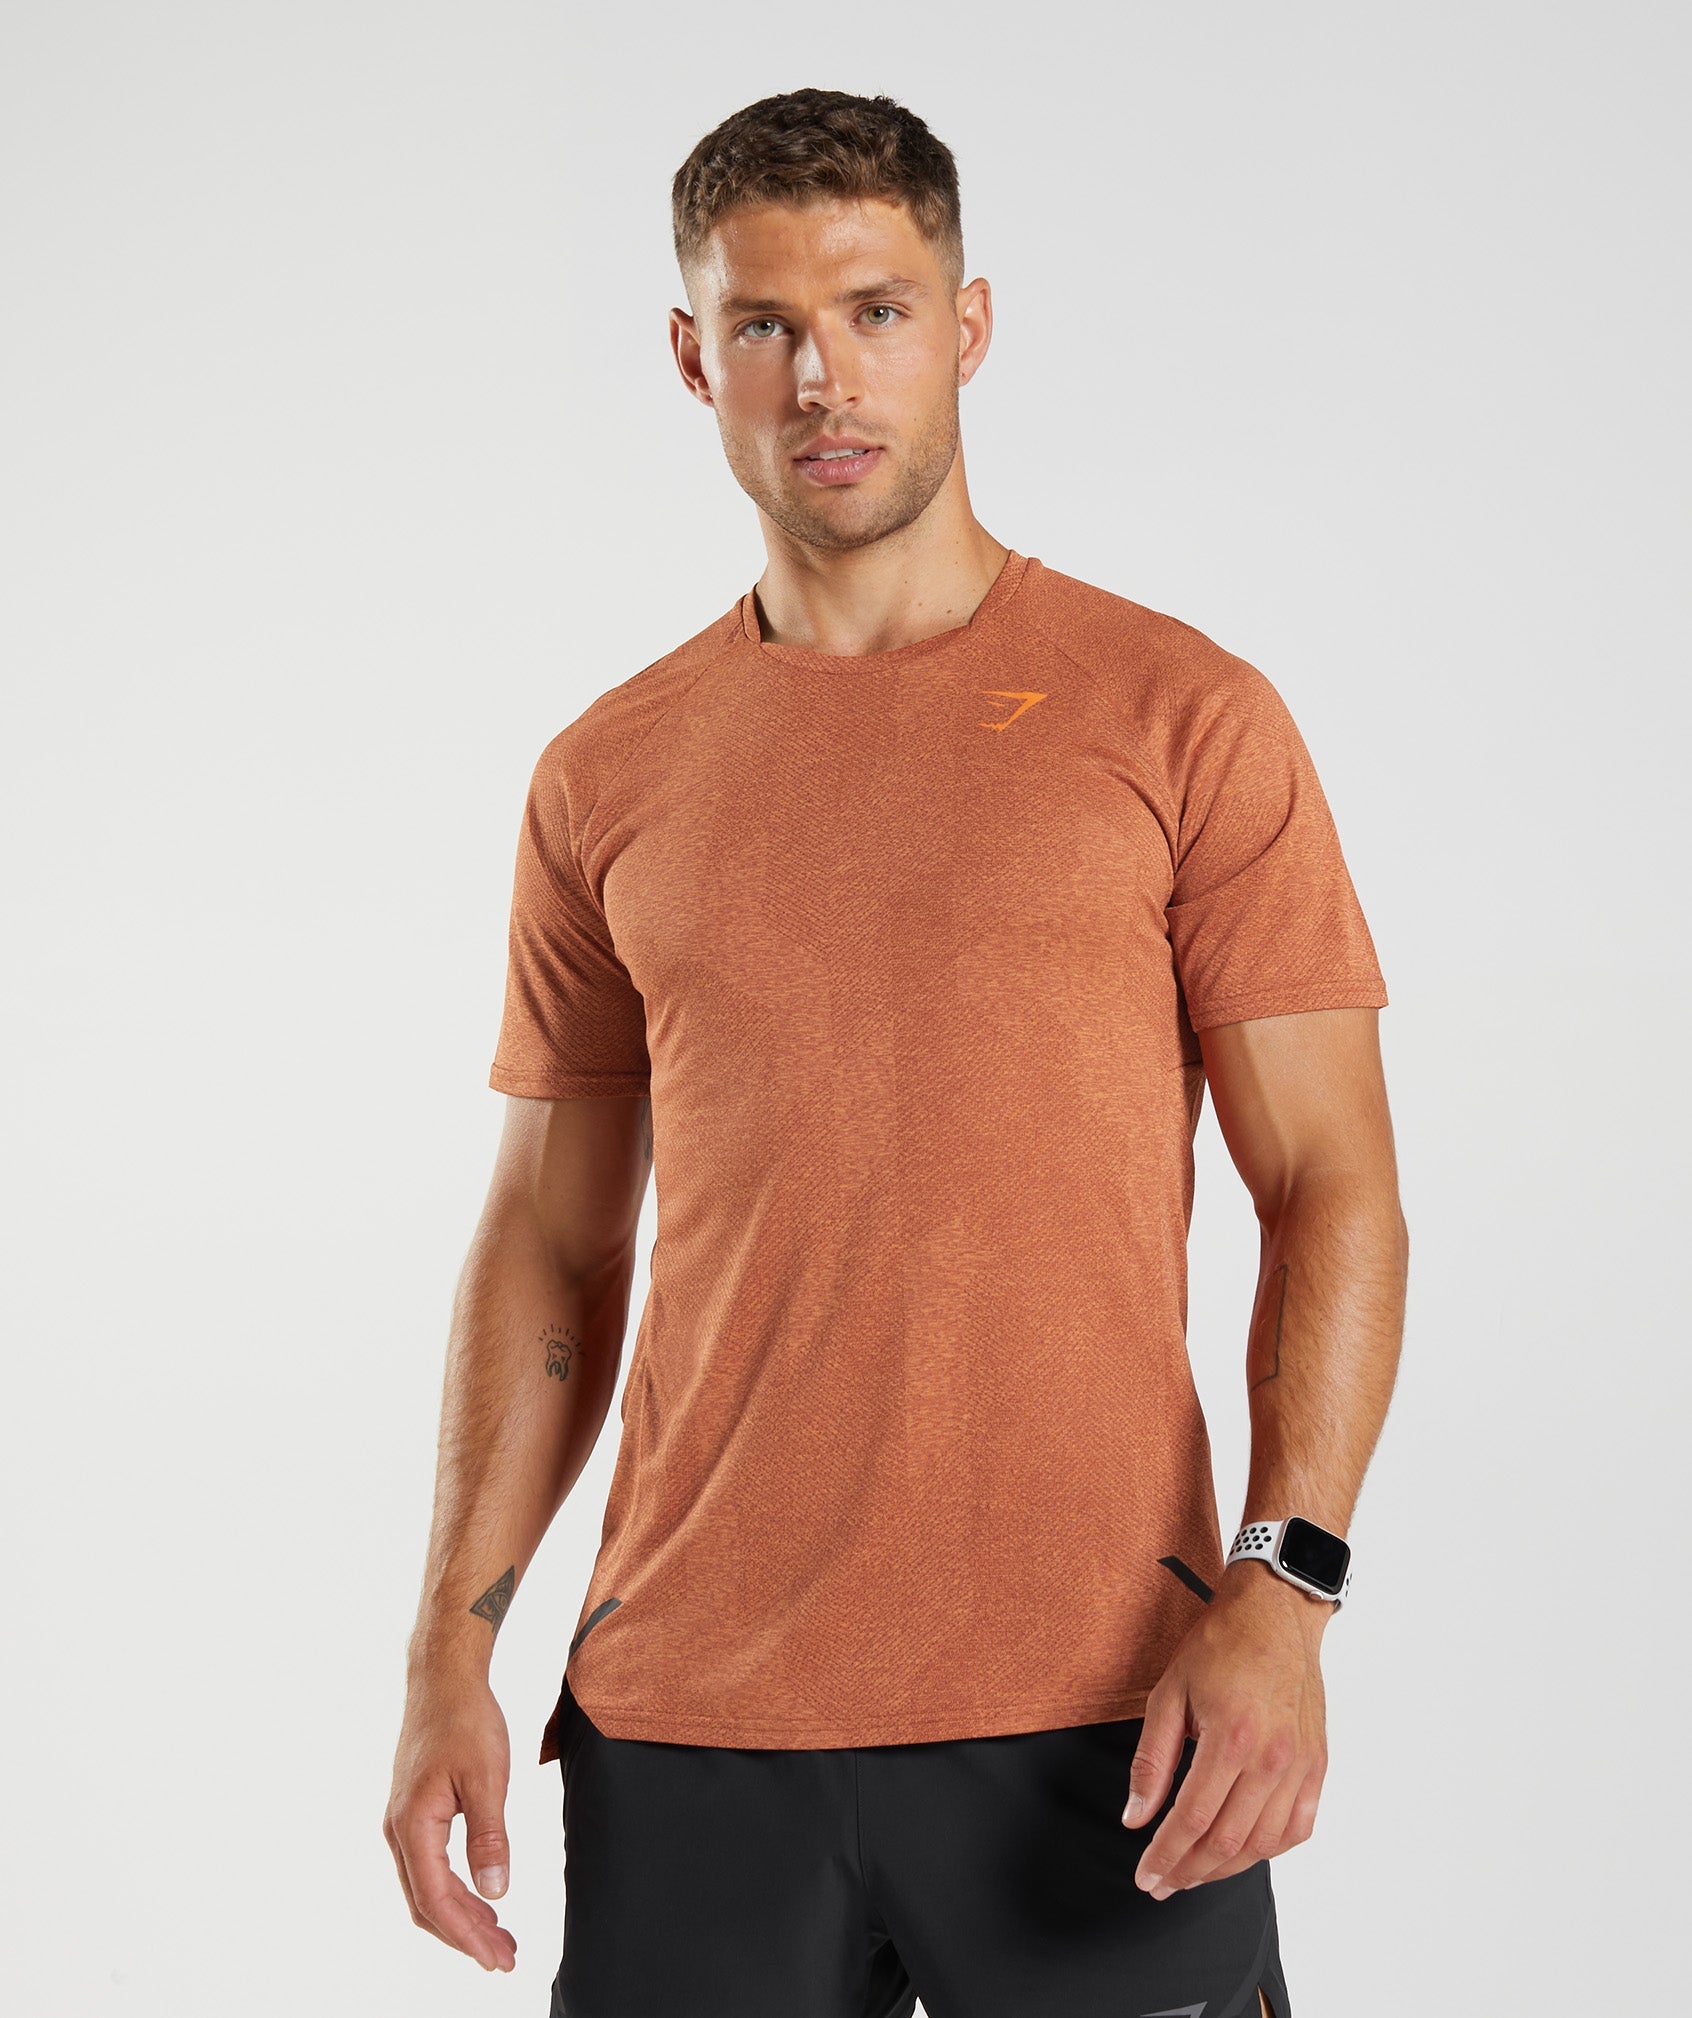 Apex T-Shirt in Mahogany Brown/Zesty Orange